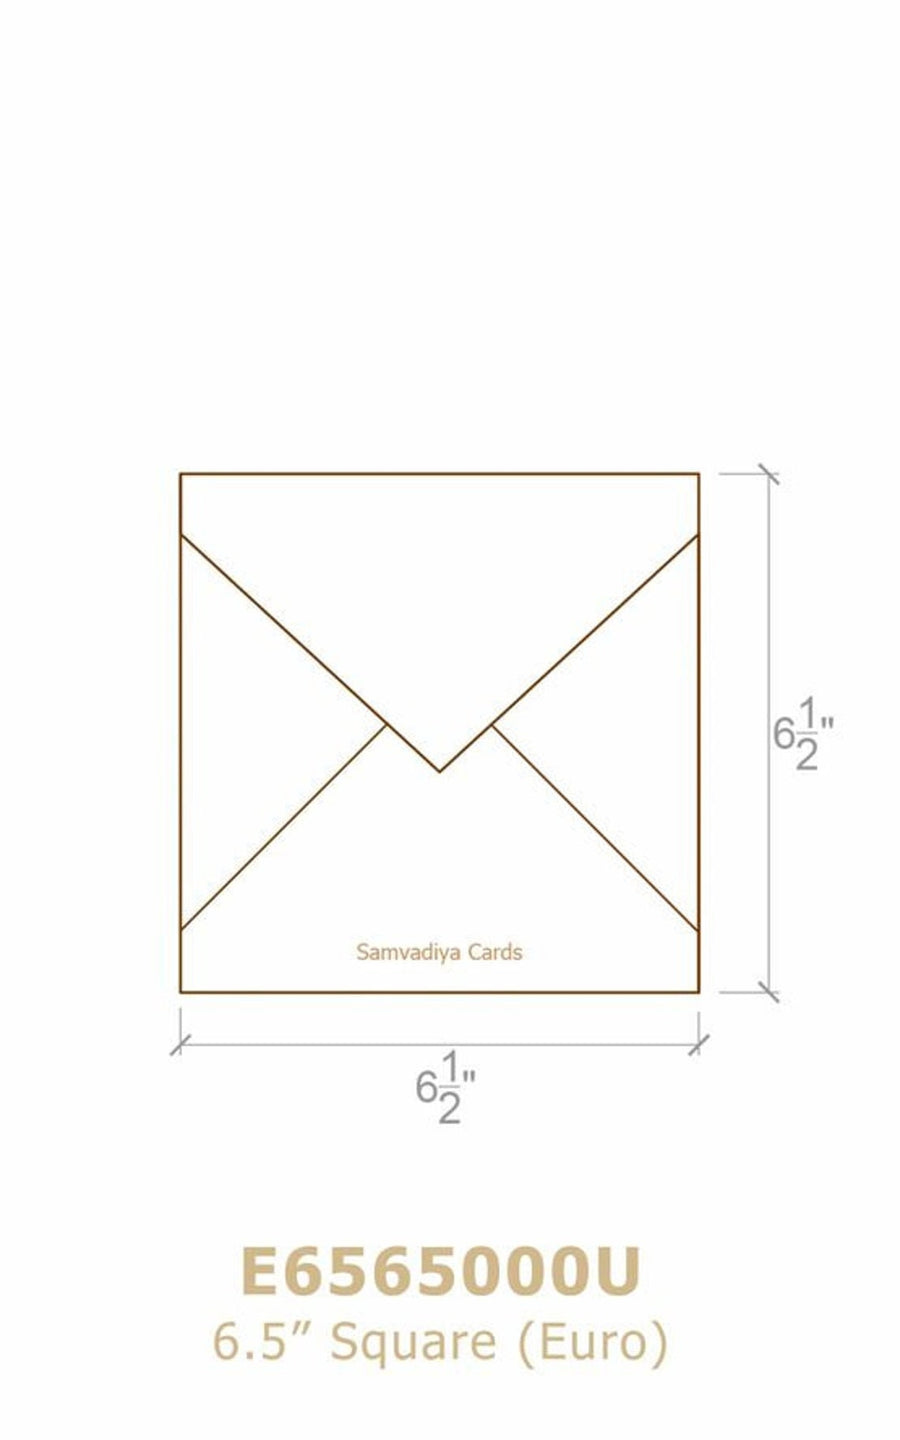 Premium Envelope, Invitation Envelope handmade cotton paper, 6.5 inch Square euro flap envelope, Natural Recycled Chocolate Brown